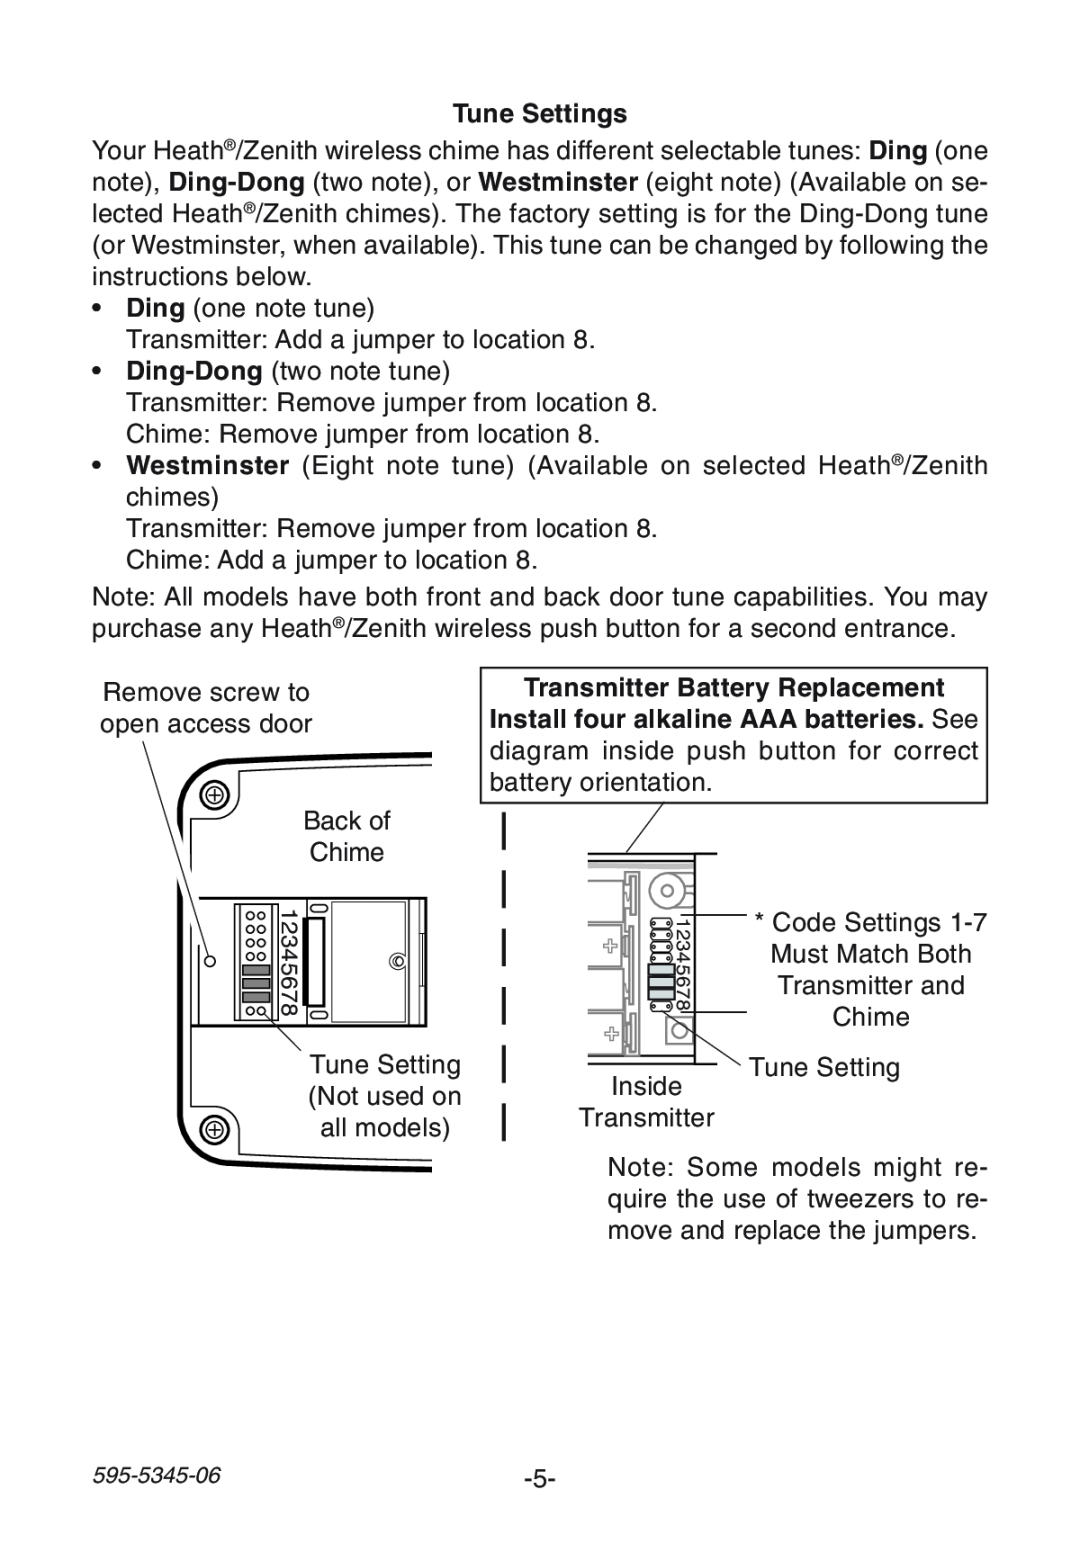 Heath Zenith SL-6157 manual Tune Settings, Transmitter Battery Replacement 